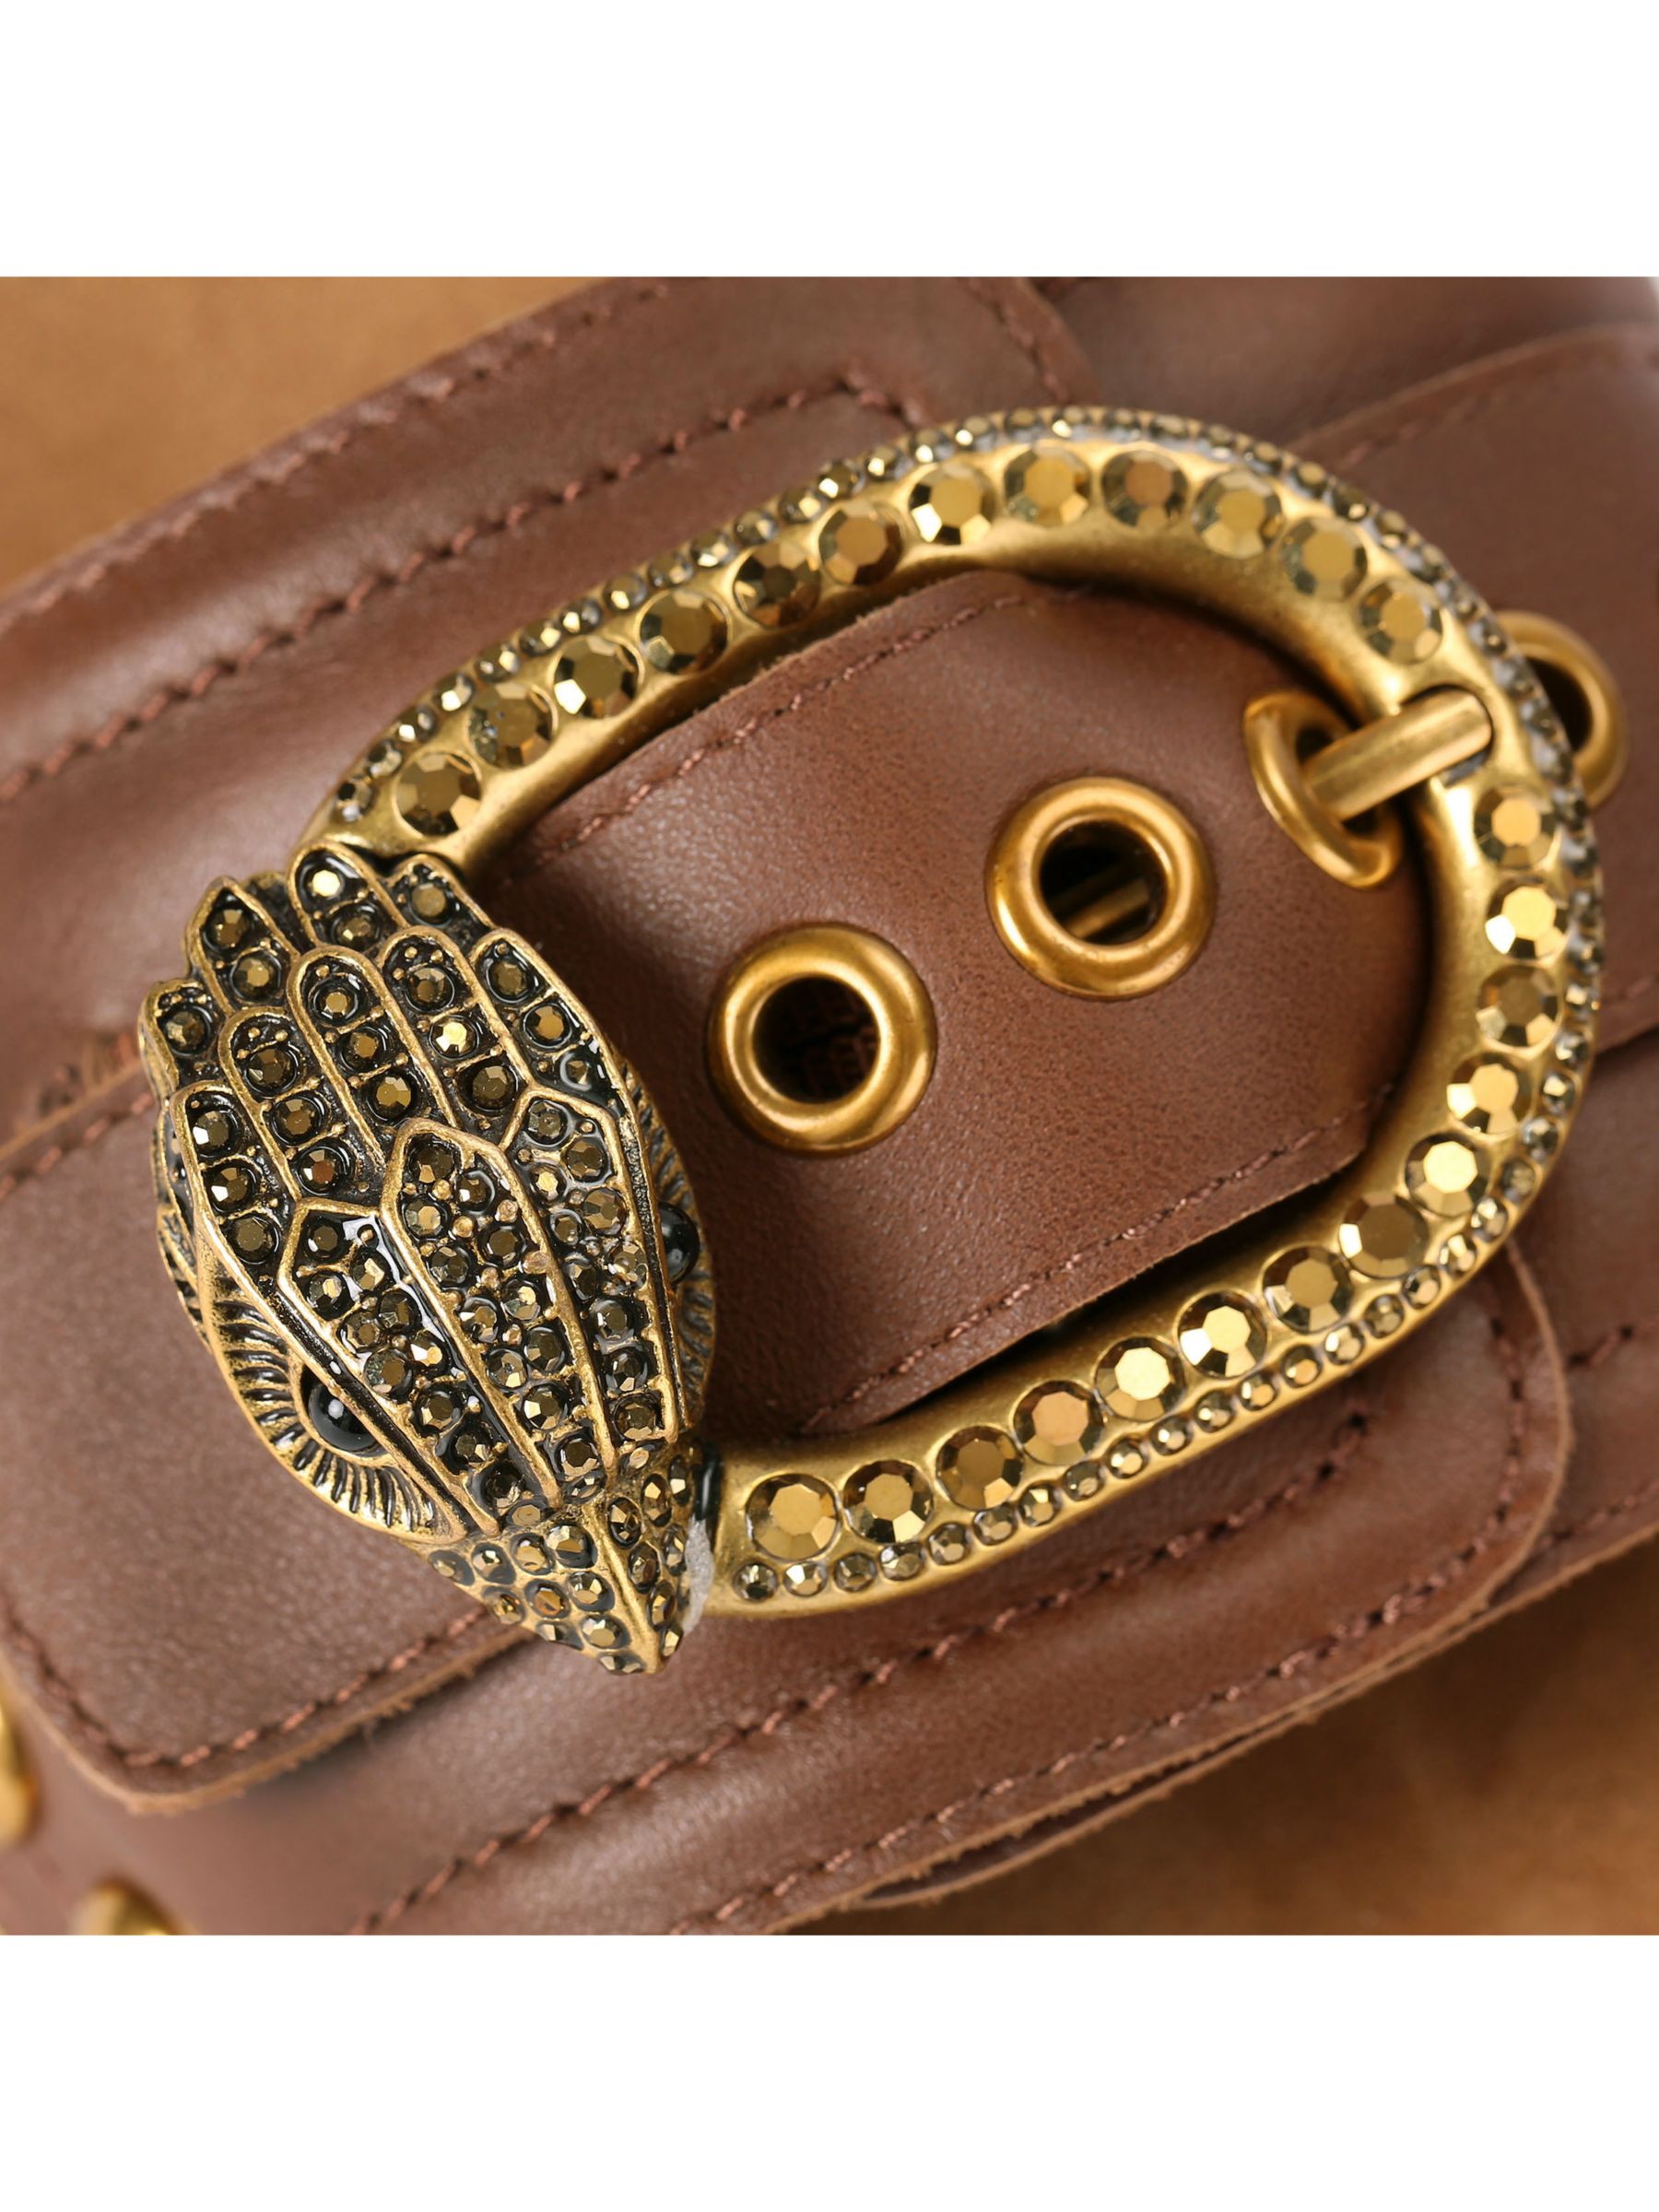 Buy Kurt Geiger London Mayfair Flatform Leather Sandals, Tan Online at johnlewis.com